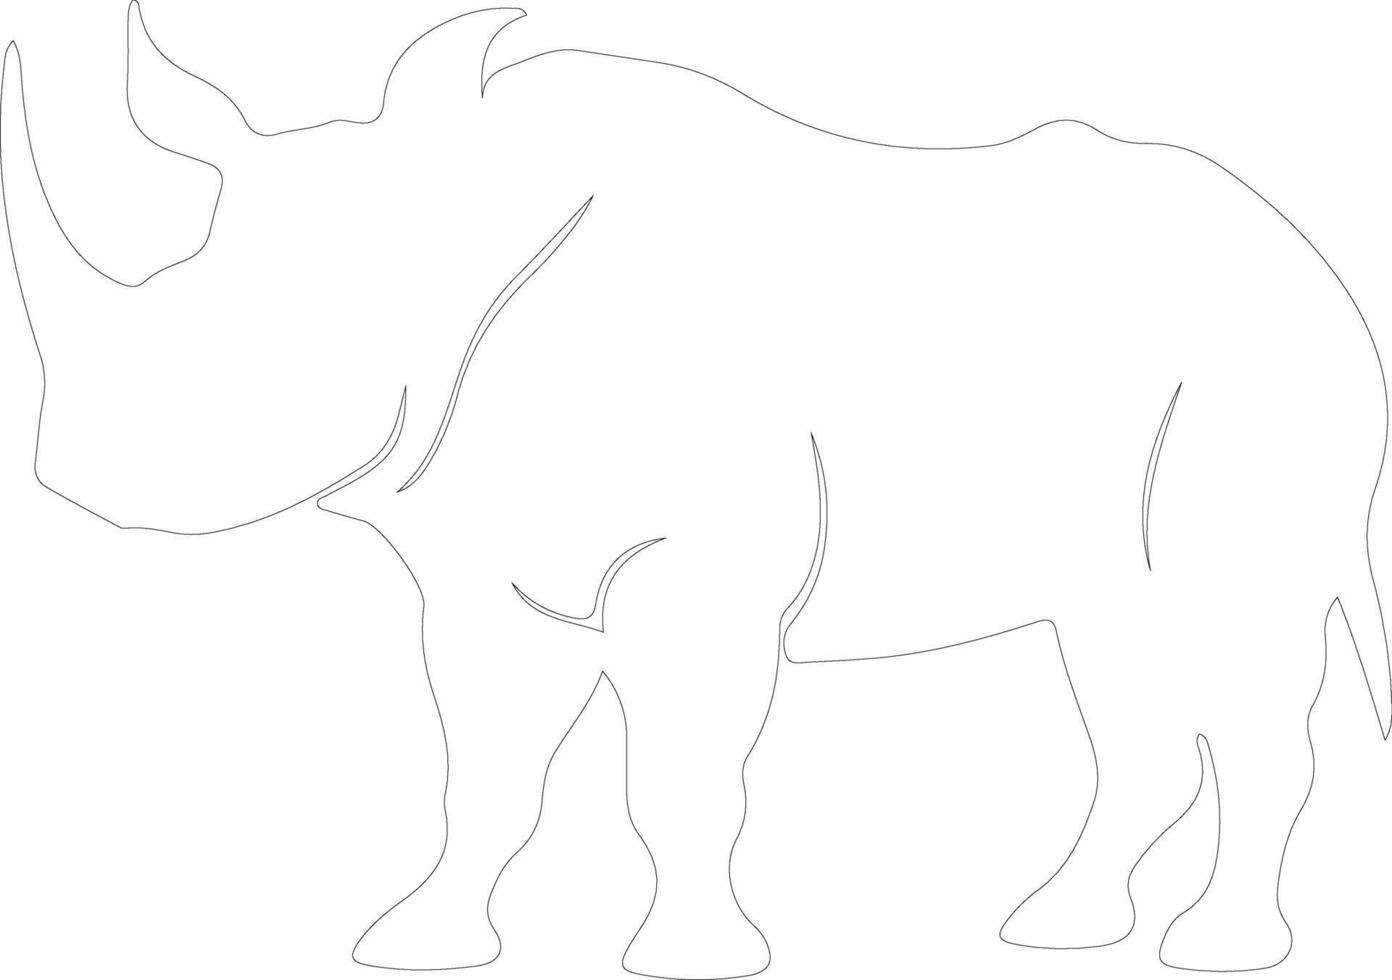 wollig neushoorn schets silhouet vector